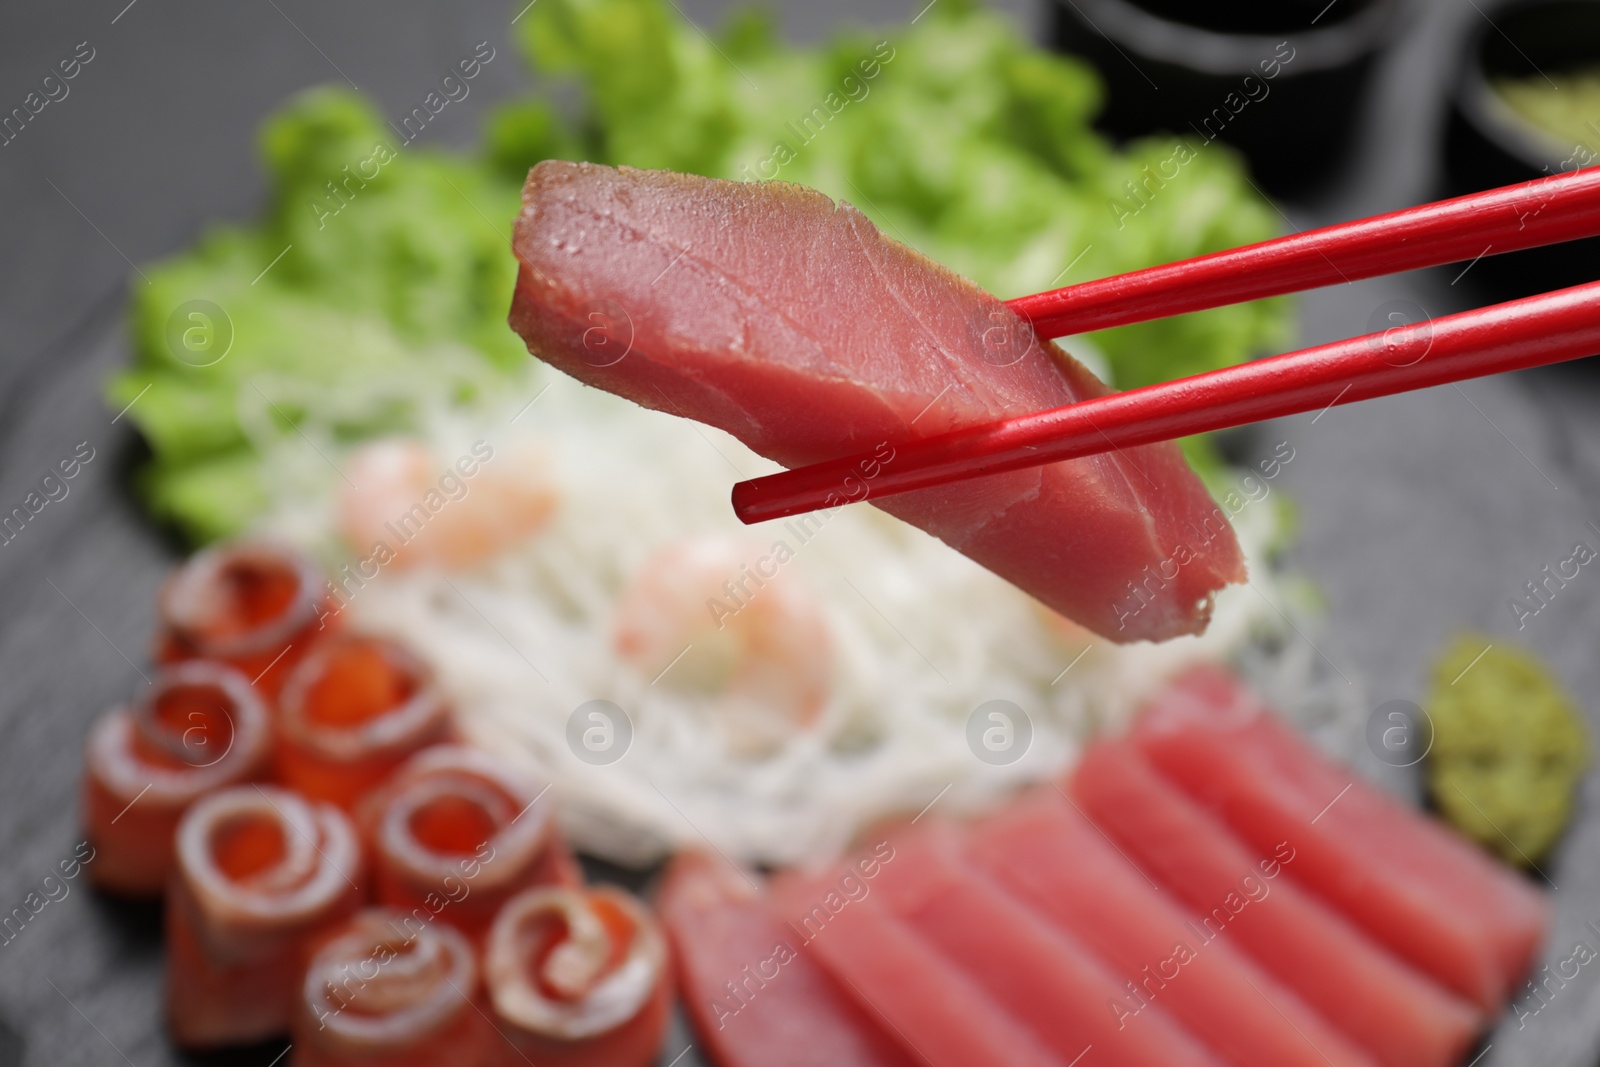 Photo of Chopsticks with tasty sashimi (piece of fresh raw tuna) against blurred background, closeup